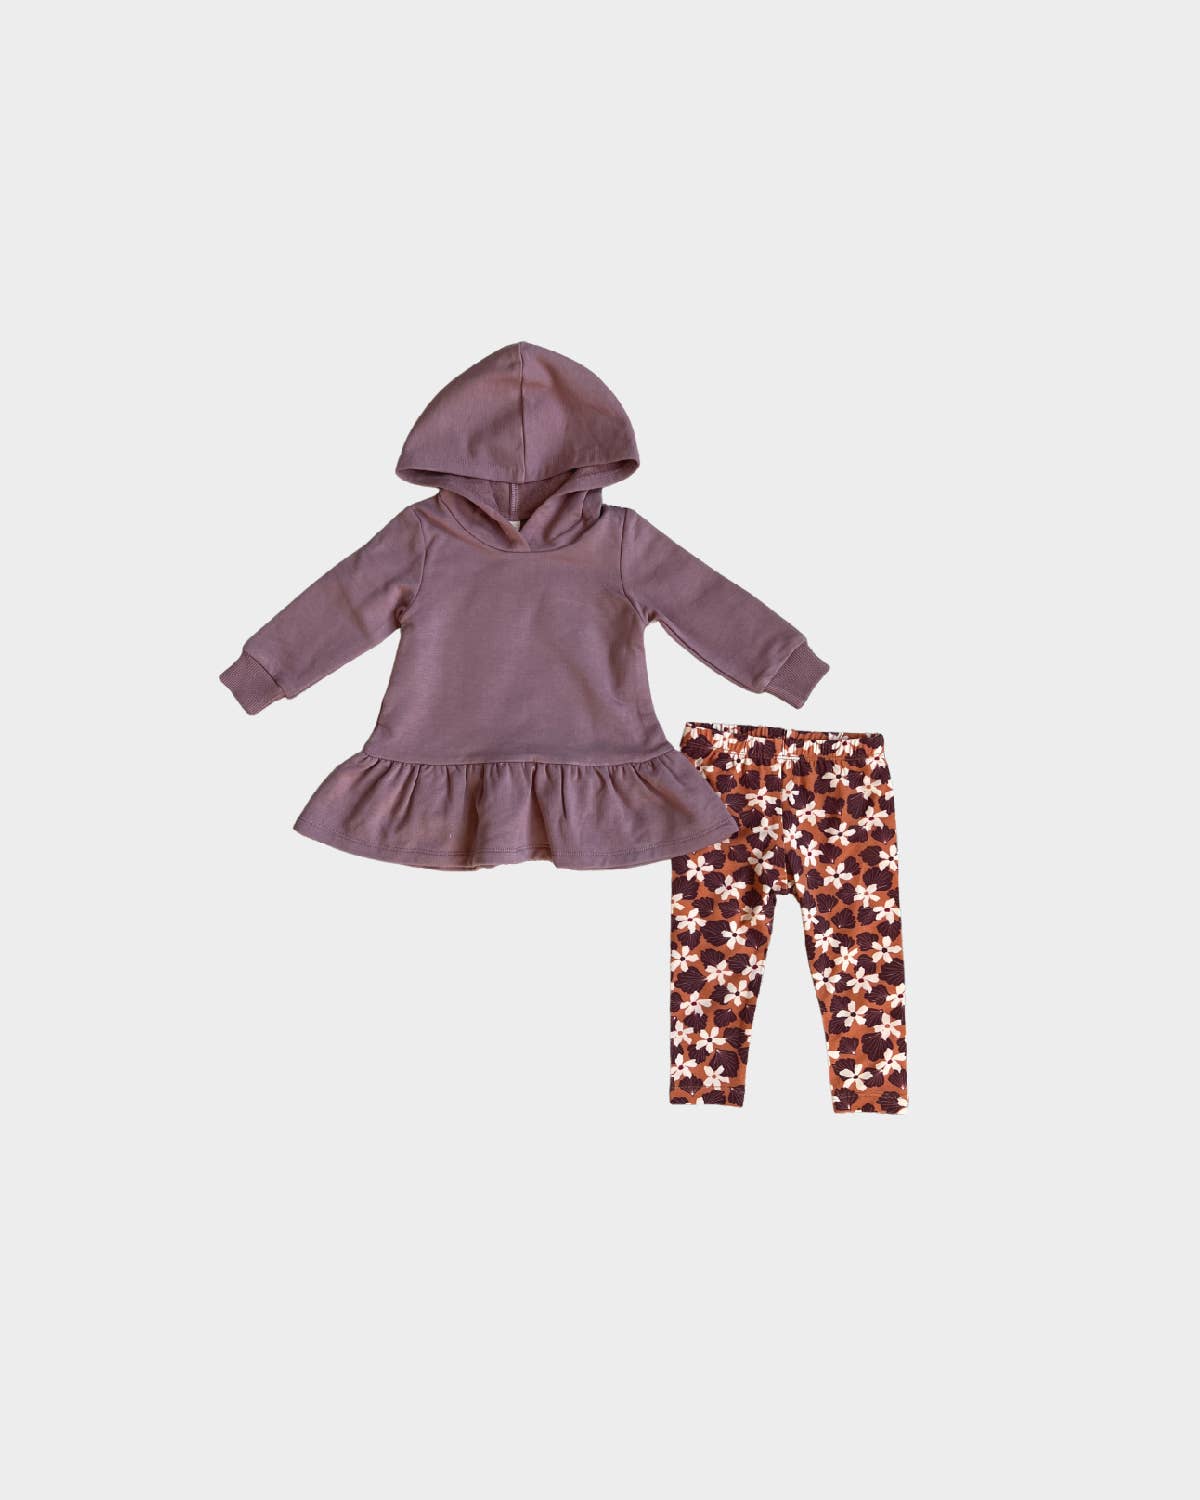 babysprouts clothing company - F23 D2: Girl's Fleece Peplum & Leggings in Plum